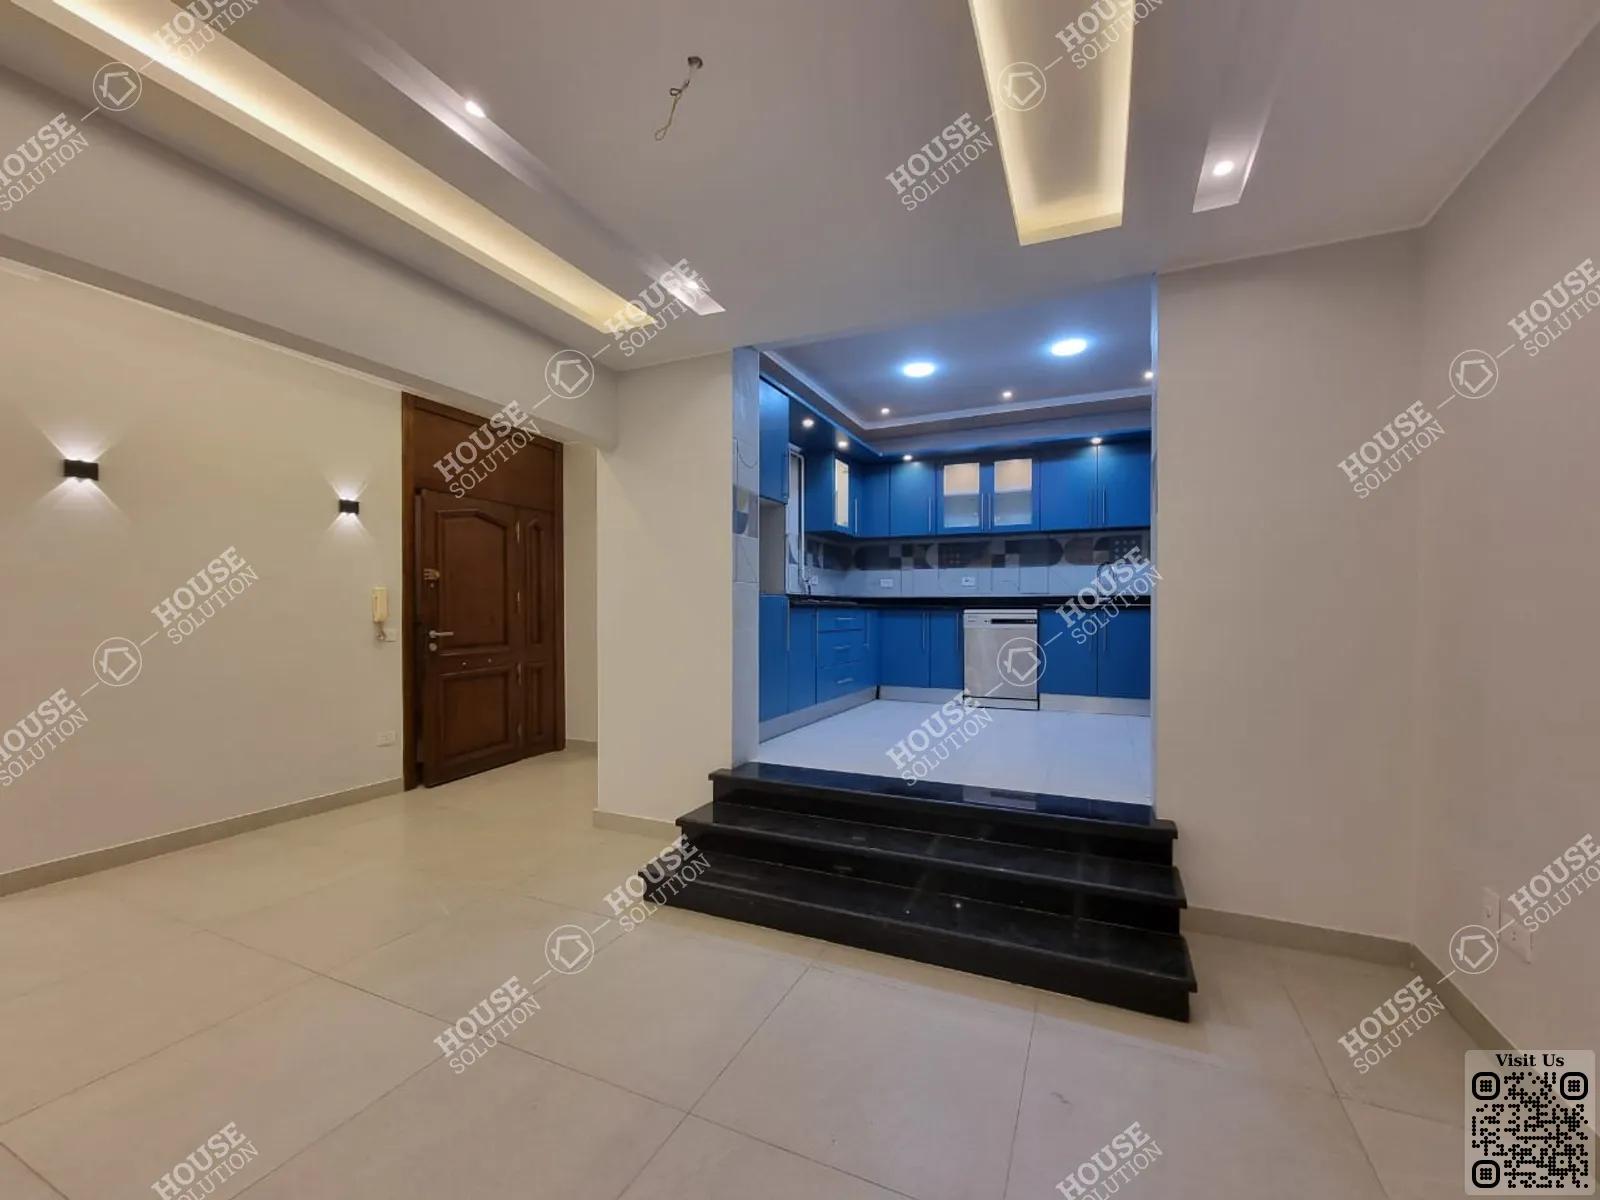 KITCHEN  @ Apartments For Sale In Maadi Maadi Sarayat Area: 175 m² consists of 3 Bedrooms 2 Bathrooms Semi furnished 5 stars #5158-1